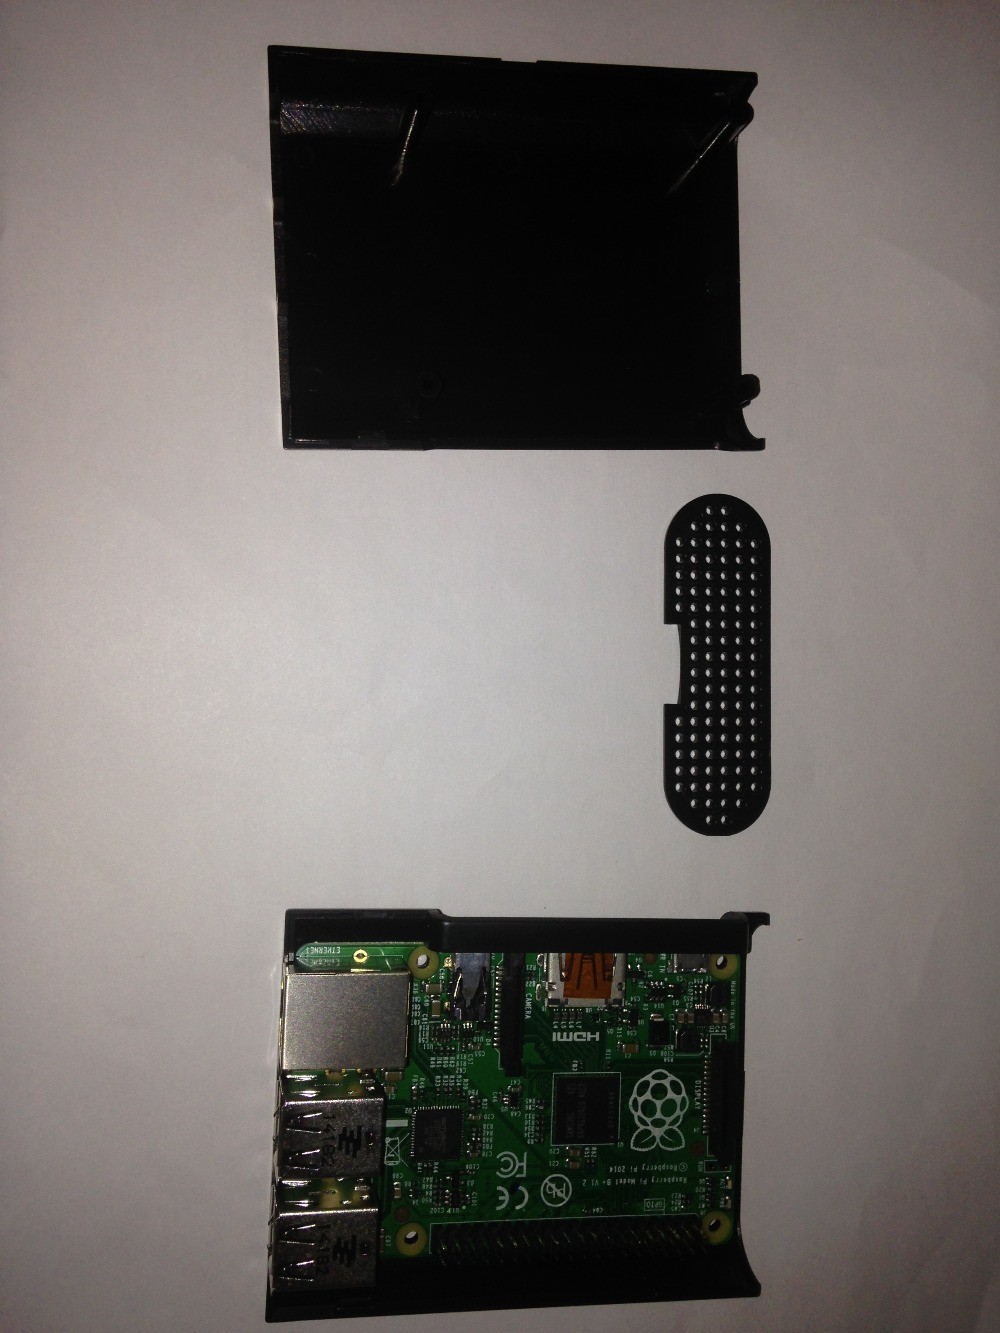 Raspberry-Pi-Model-B-B-Plus-Black-Case-Cover-Shell-Enclosure-Box- ABS-box-PI-not